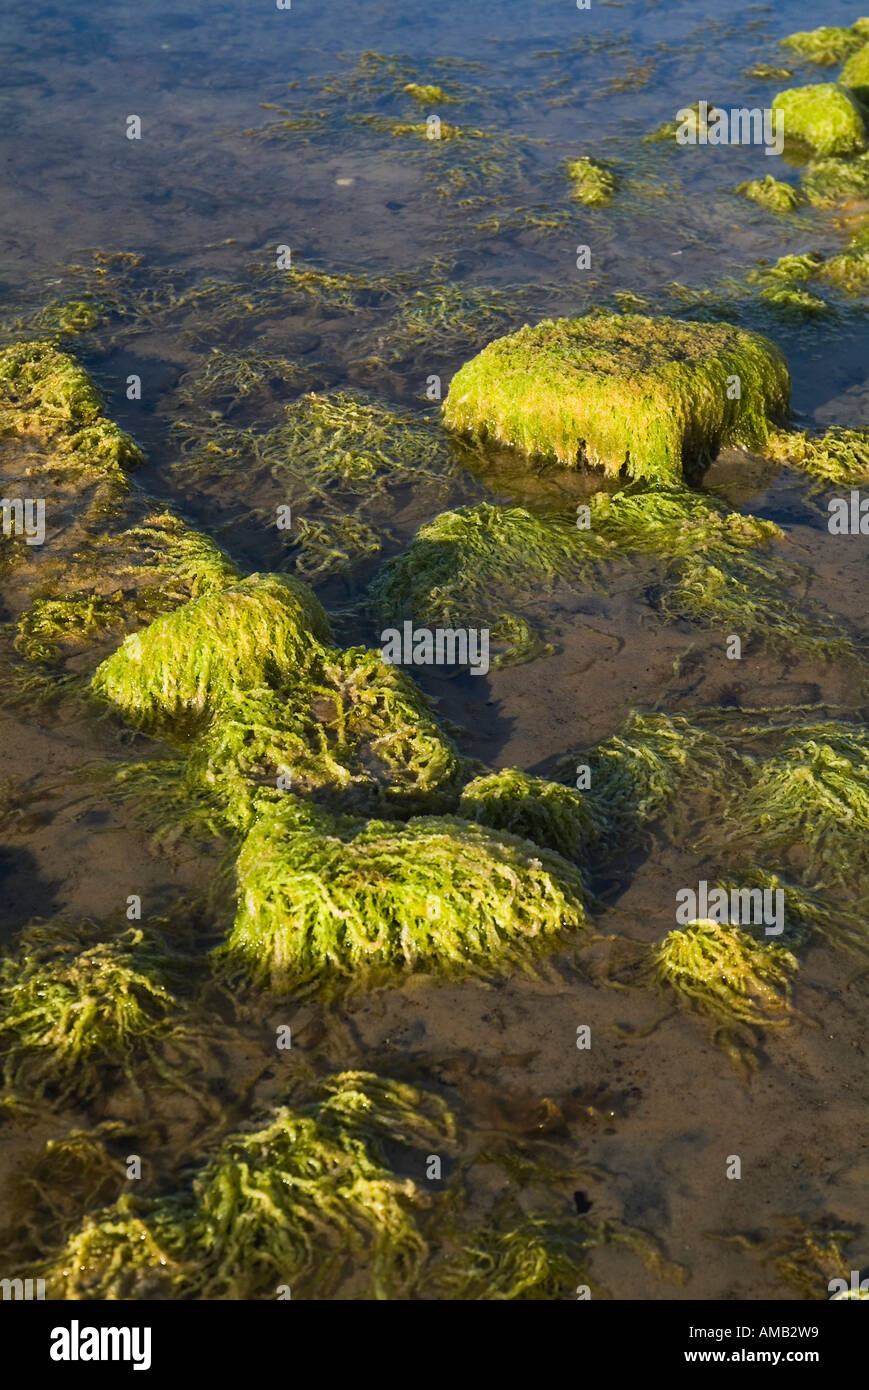 dh  SEAWEED UK Yellow green enteromorpha intestinalis seaweed or rocky shore sandy bay sea weed algae rock seashore marine life Stock Photo